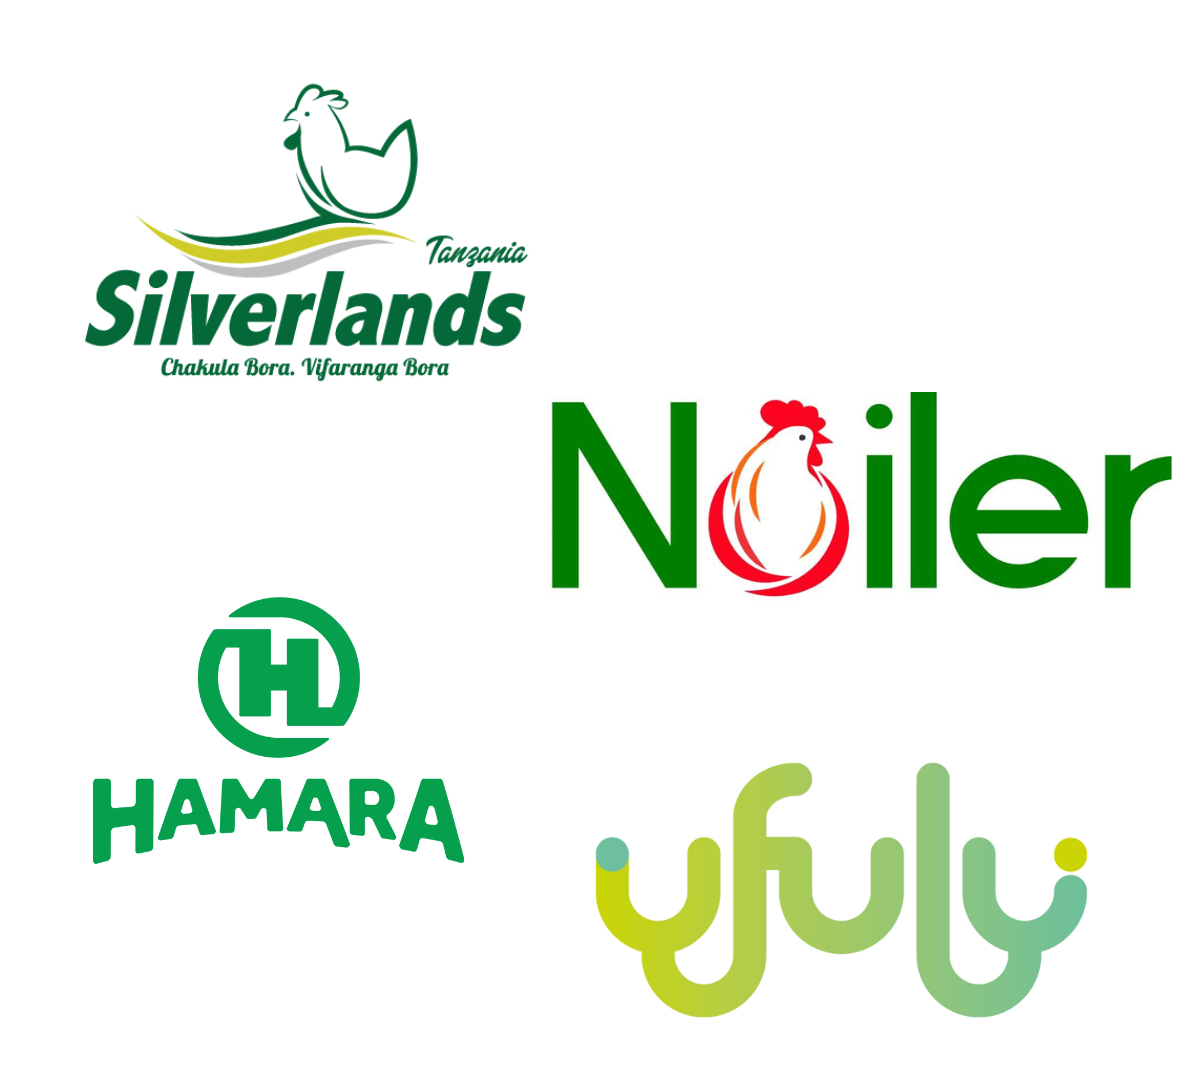 Logos for Silverlands Hamara, Noiler, and Ufulu